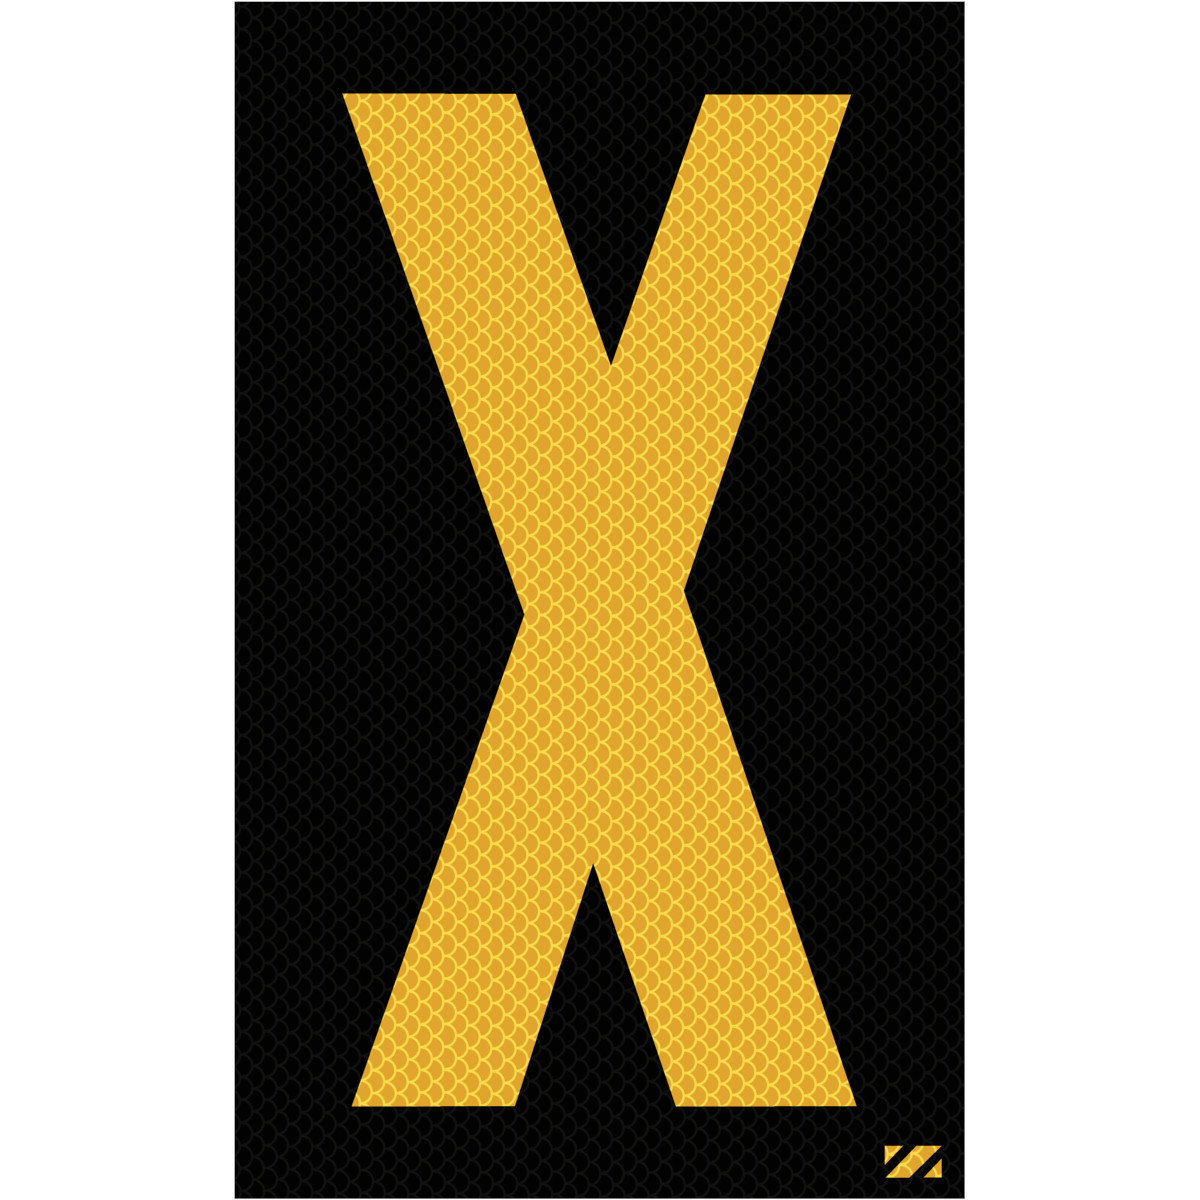 2.5" Yellow on Black High Intensity Reflective "X"